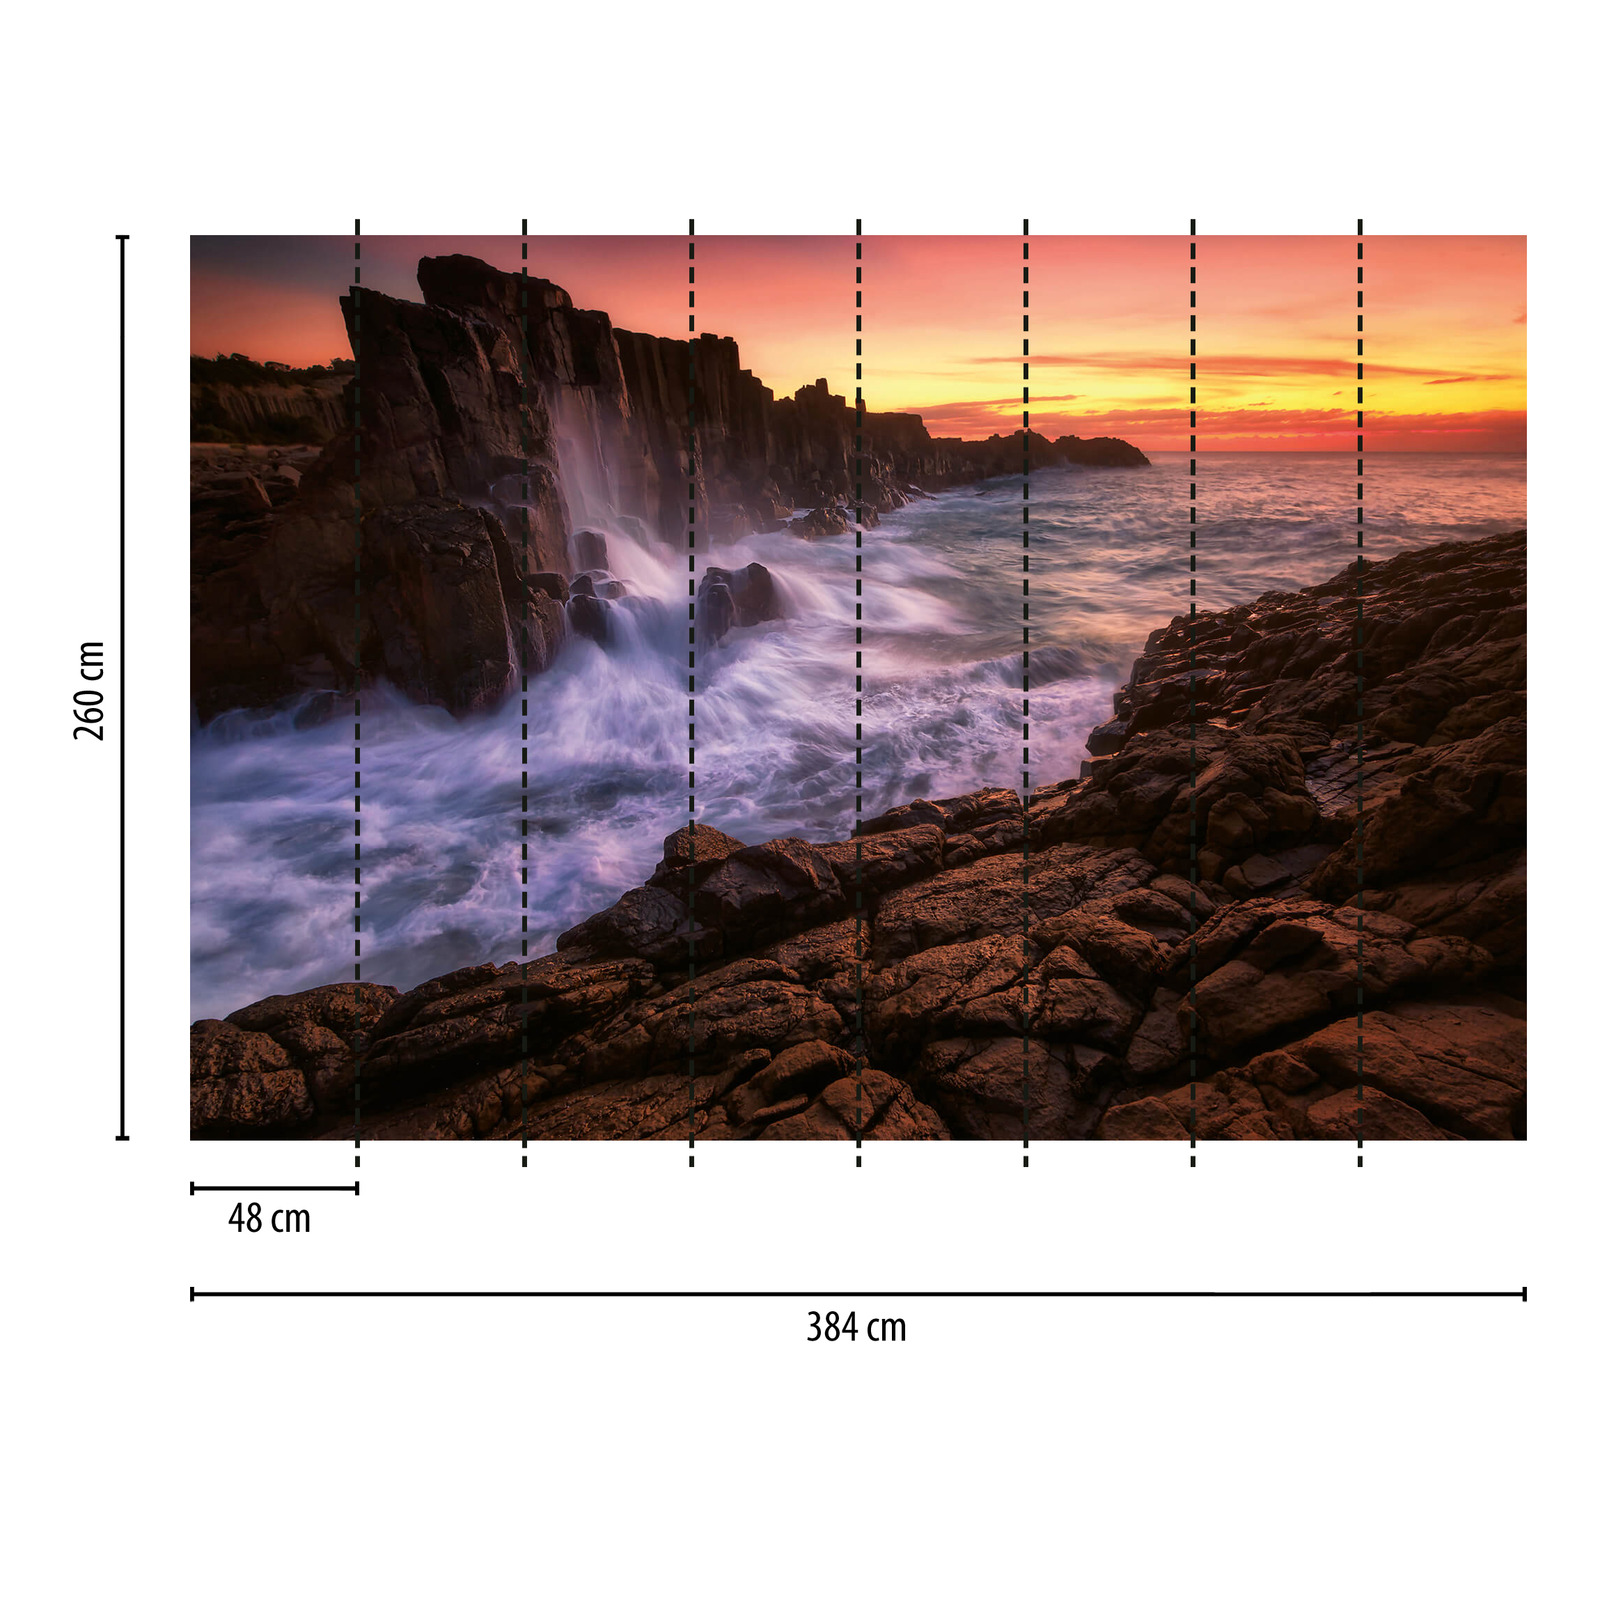             Photo wallpaper cliffs in the sunrise - brown, blue
        